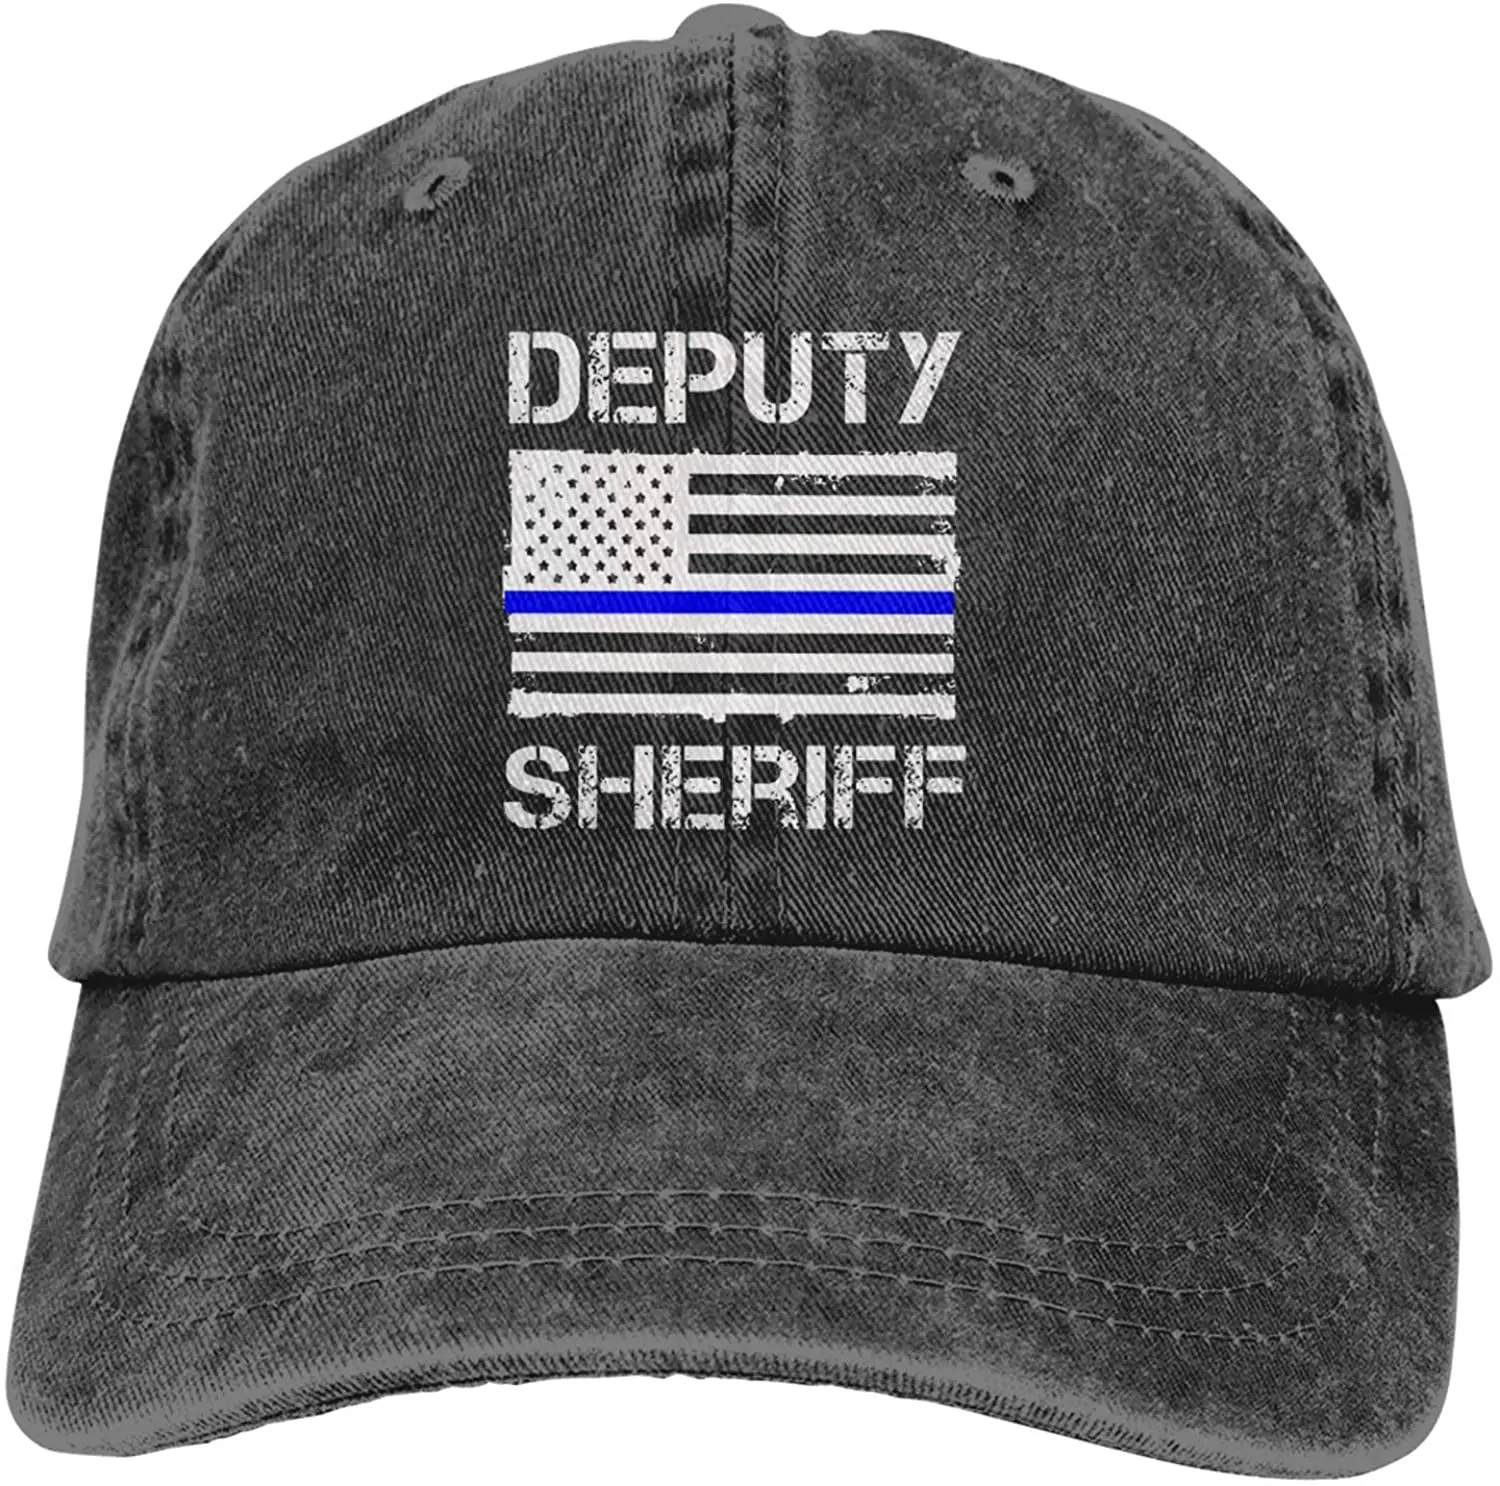 

Deputy Sheriff US Flag Denim Dad Hat Cotton Classic Baseball Cap Jeans Casquette Adjustable Trucker Caps